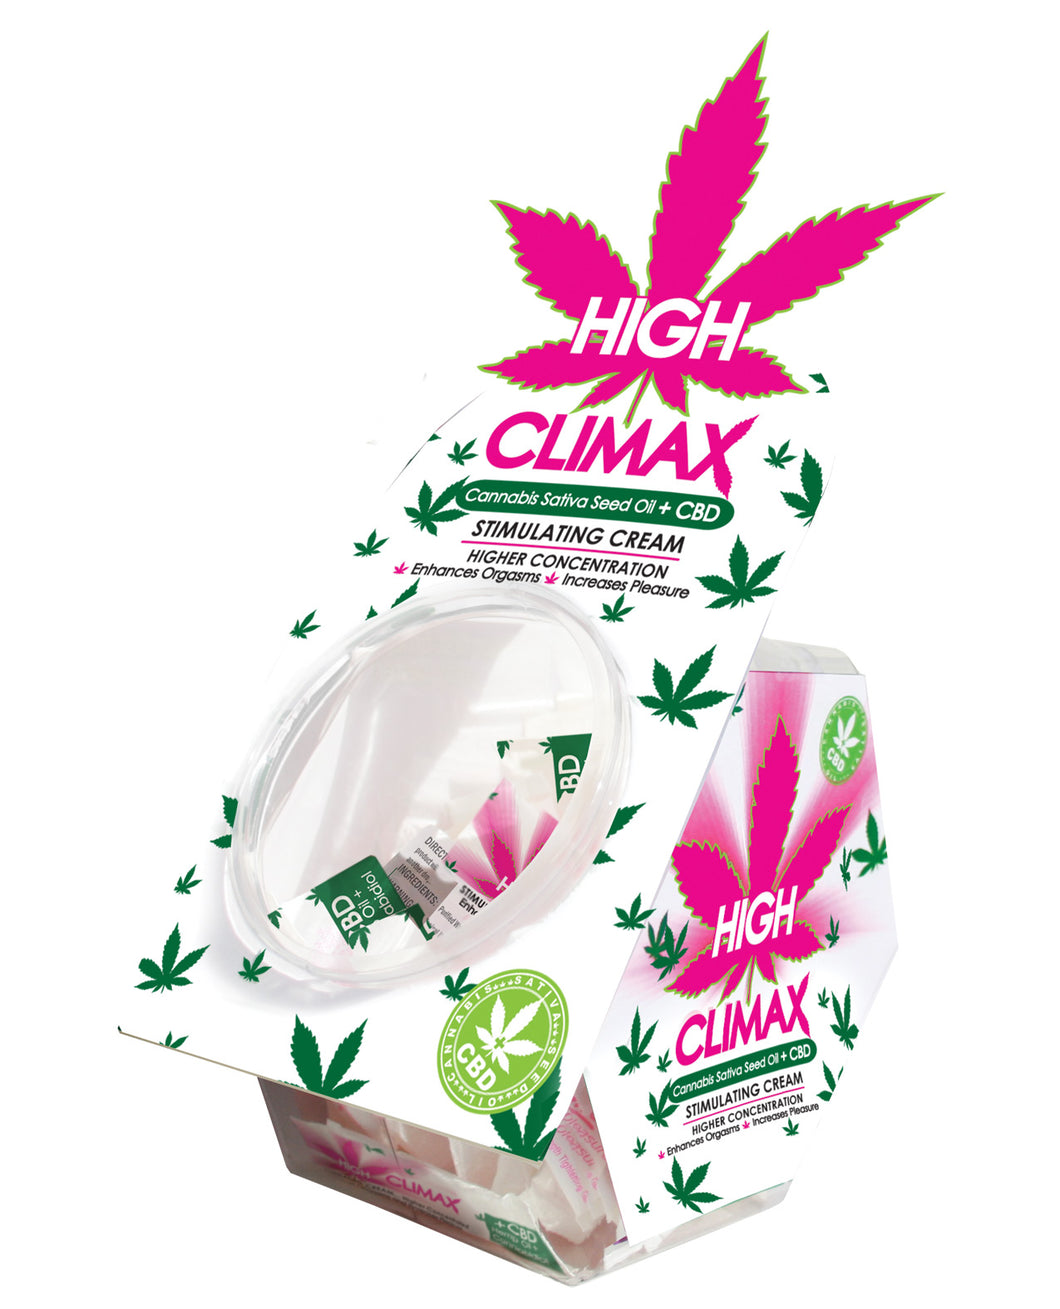 High Climax Female Stimulant W-hemp Seed Oil - Display Bowl Of 50